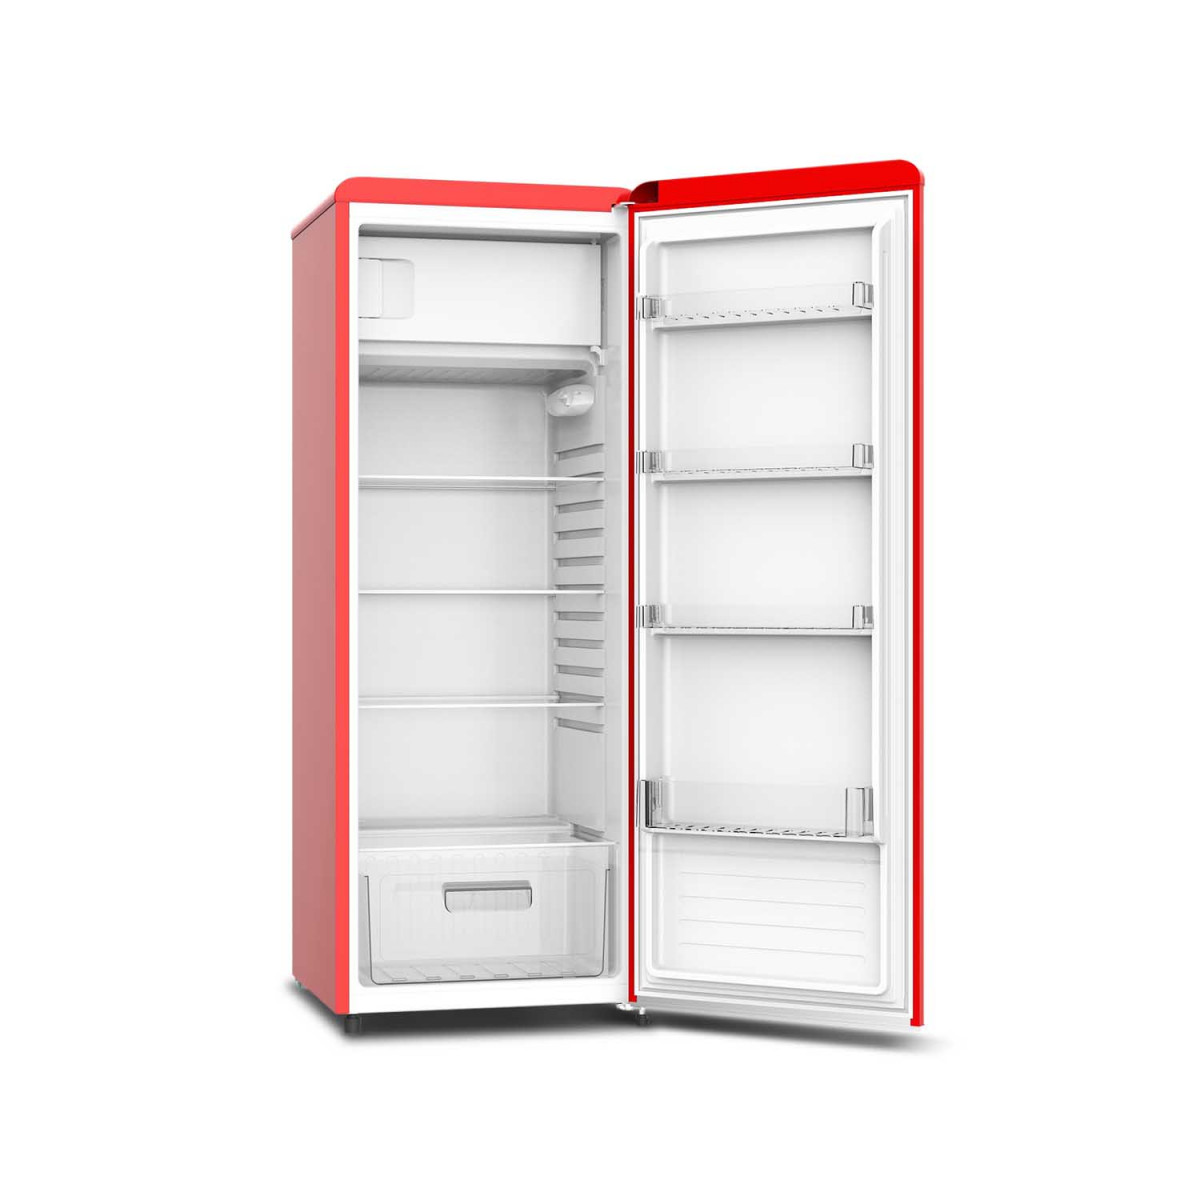 Réfrigérateur vintage 1 porte 229L rouge - Radiola - RARM200RL - Goodbuy